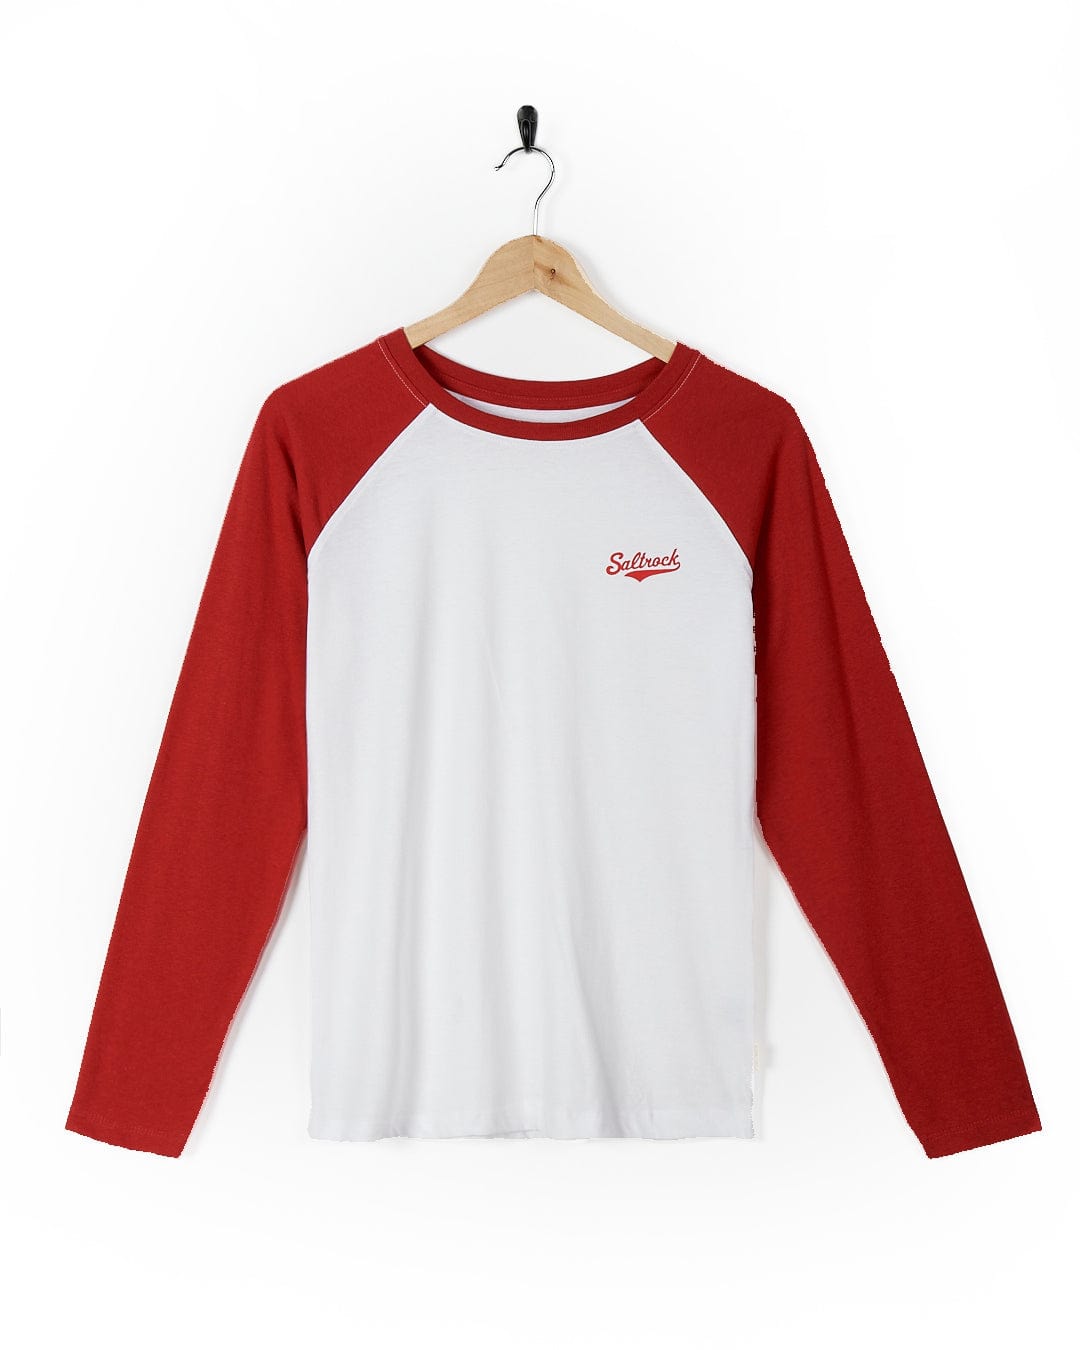 A Saltrock Carolina - Womens Long Sleeve Raglan T-Shirt - Red/White hanging on a hanger.